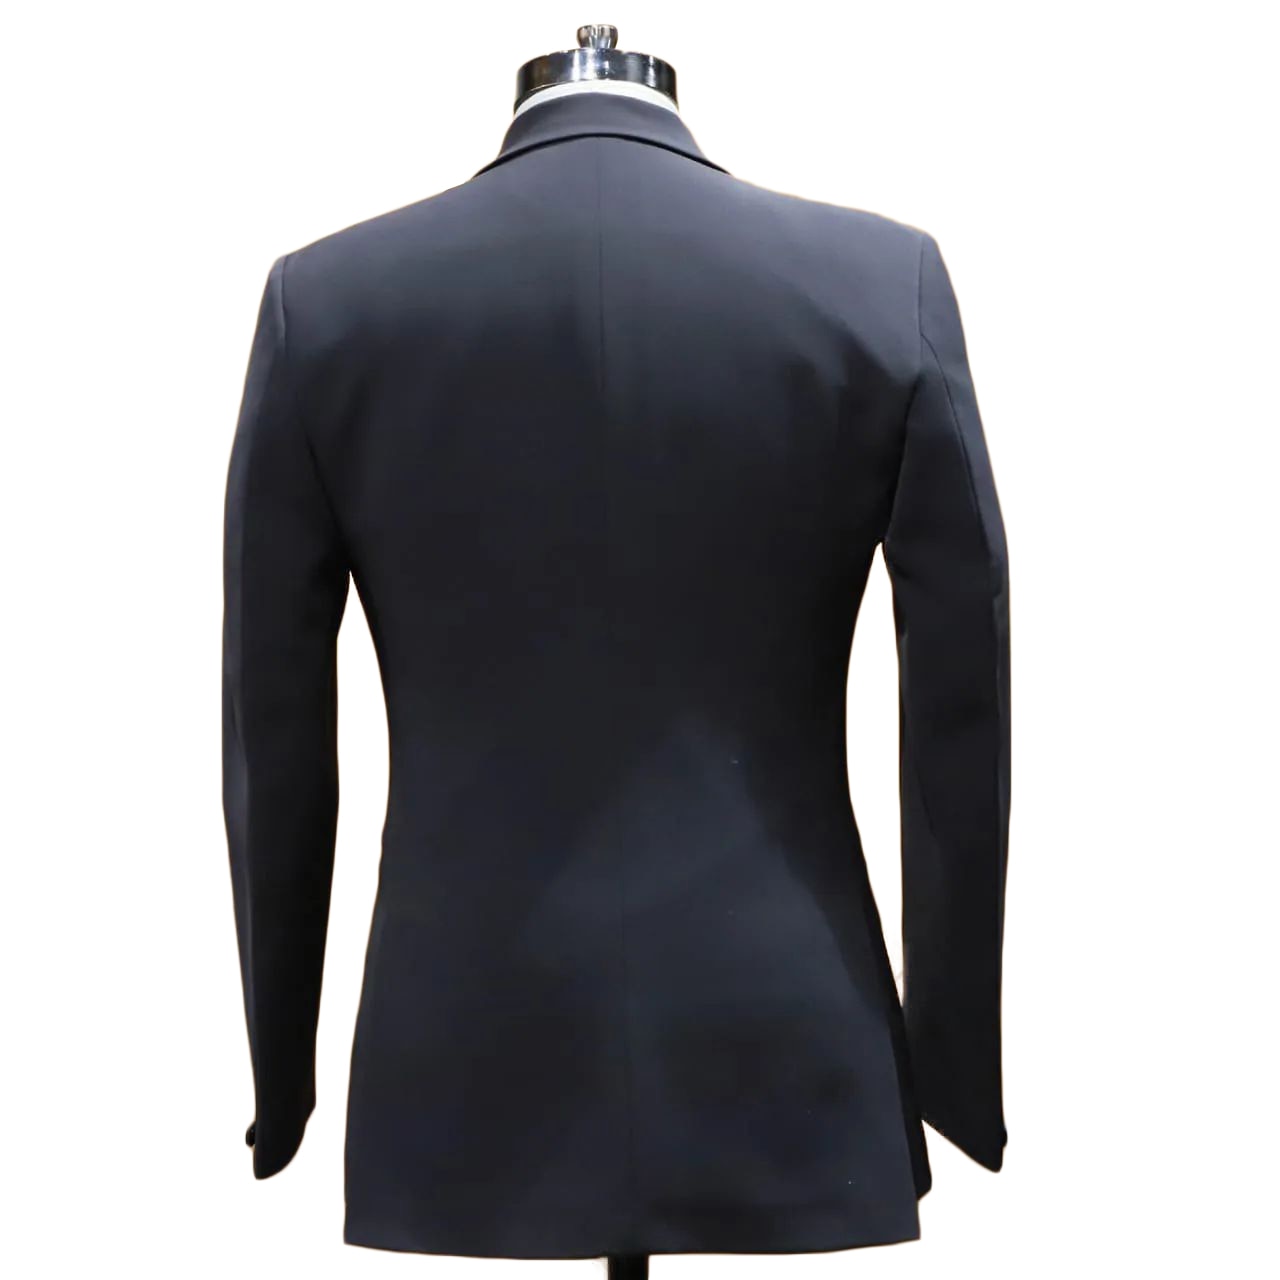 xiangtuibao Men's Suit 2 Pieces Blazer Vest One Button Peaked Satin Lapel Sequins Business Slim Fit Formal Work Wedding Groom Costume Homme